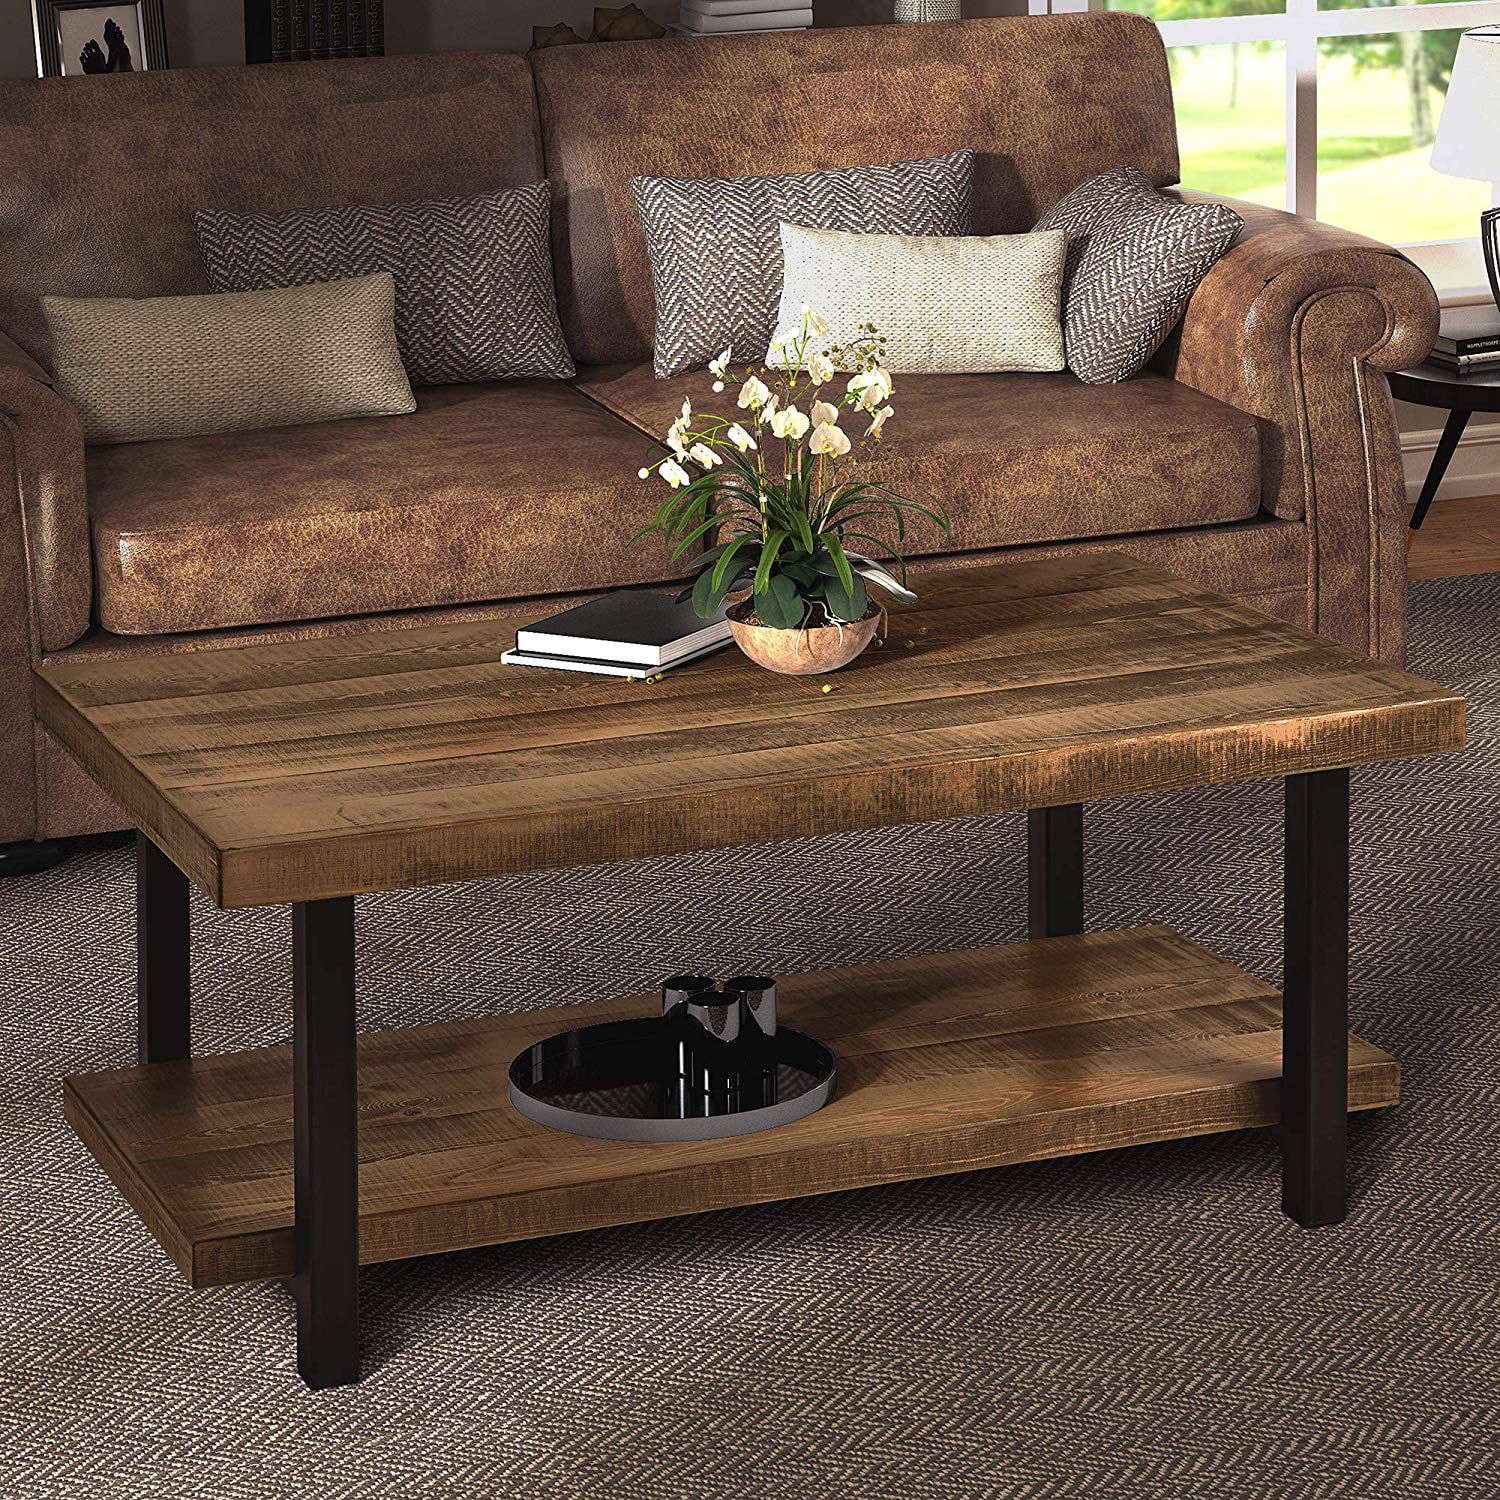 Harper&bright Designs Industrial Rectangular Pine Wood Coffee Table Regarding Rustic Wood Coffee Tables (Gallery 7 of 21)